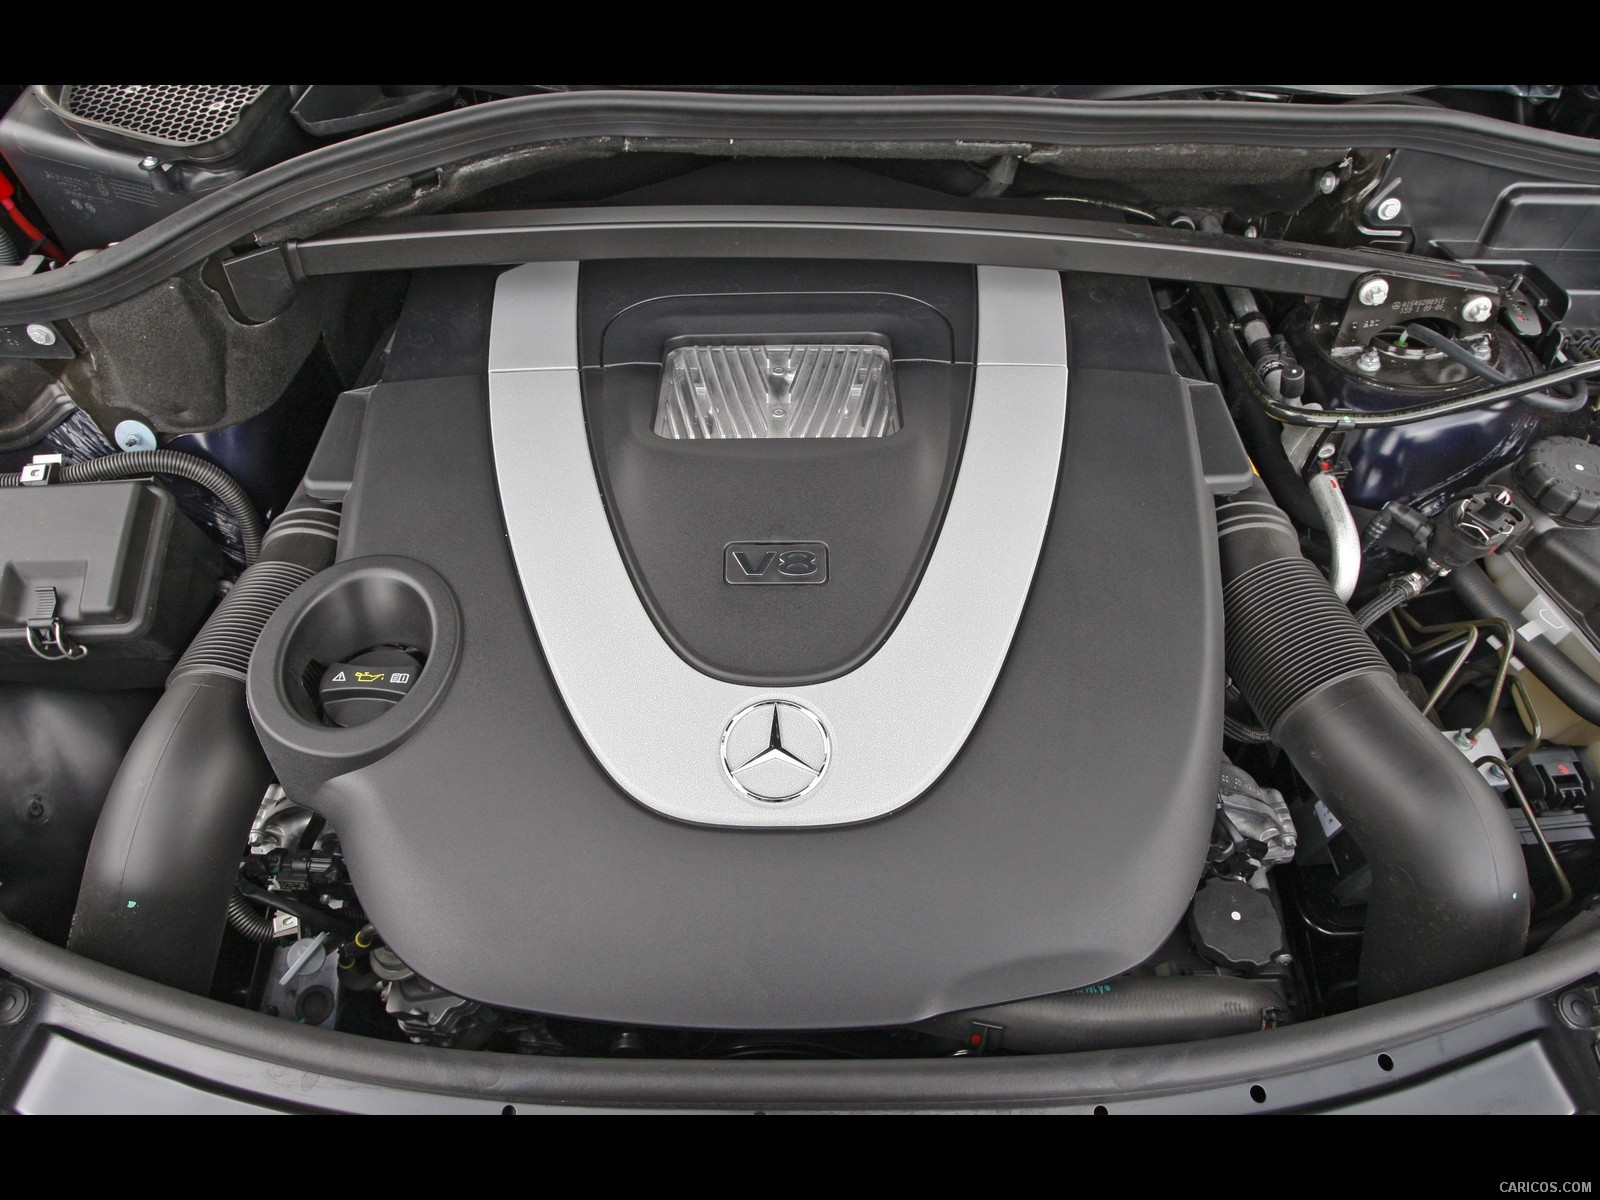 2010 Mercedes-Benz GL450 - Engine, #97 of 112